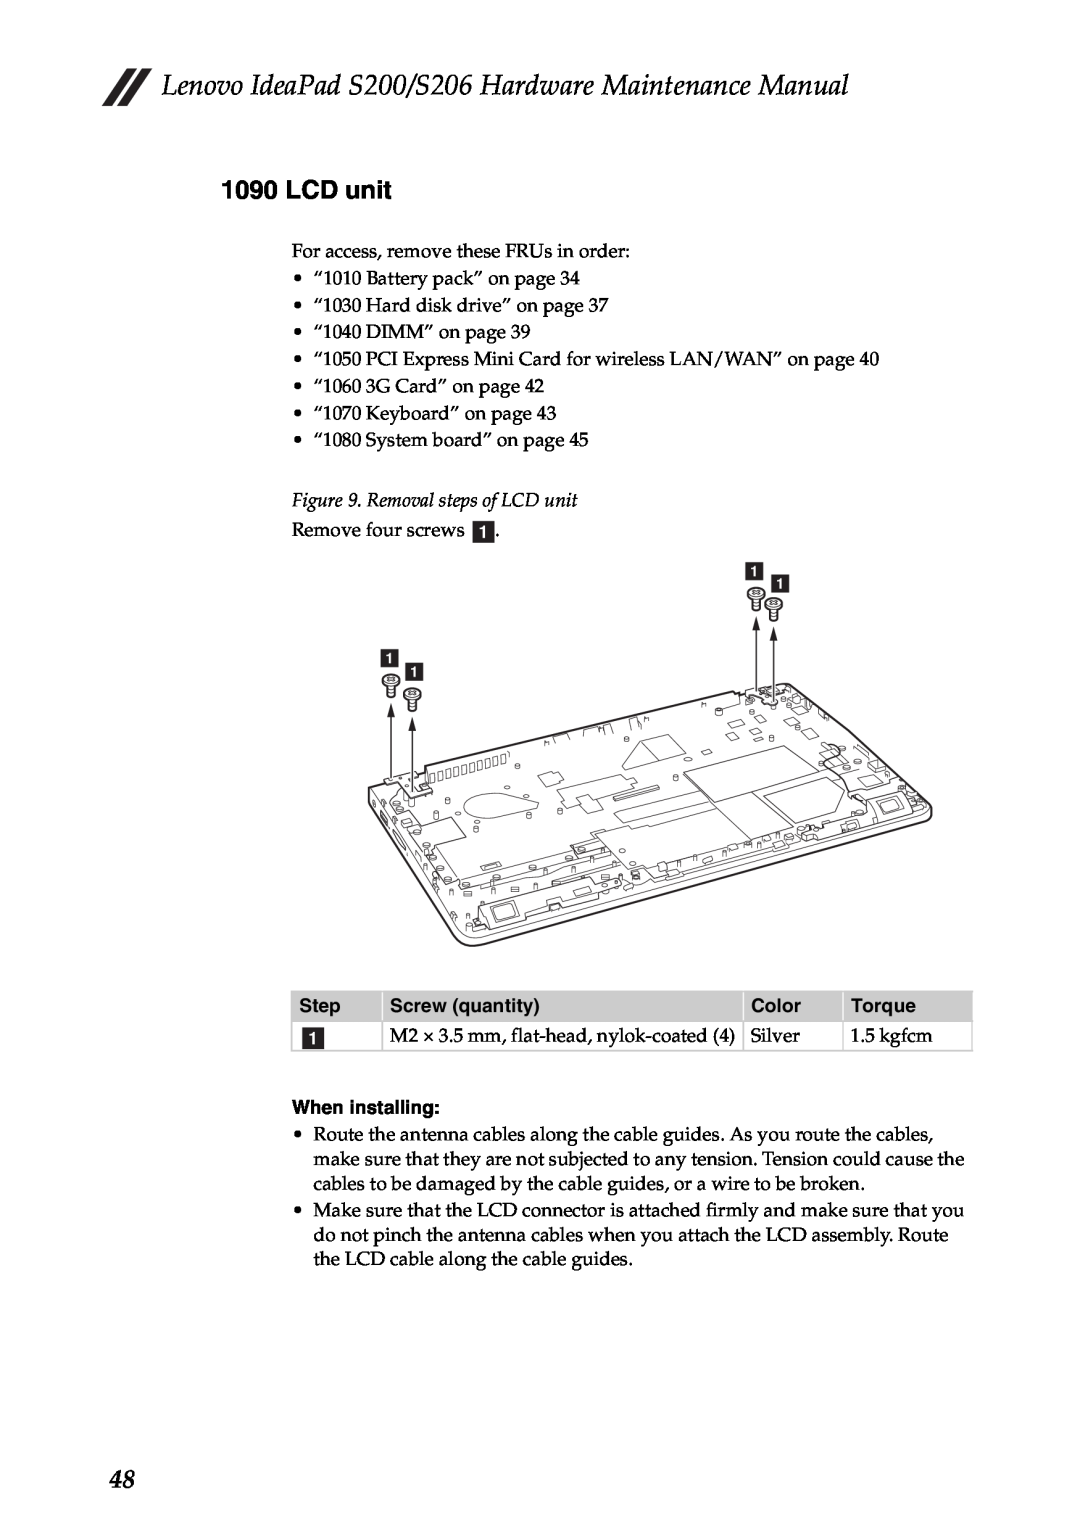 Lenovo S206, S200 manual Removal steps of LCD unit 